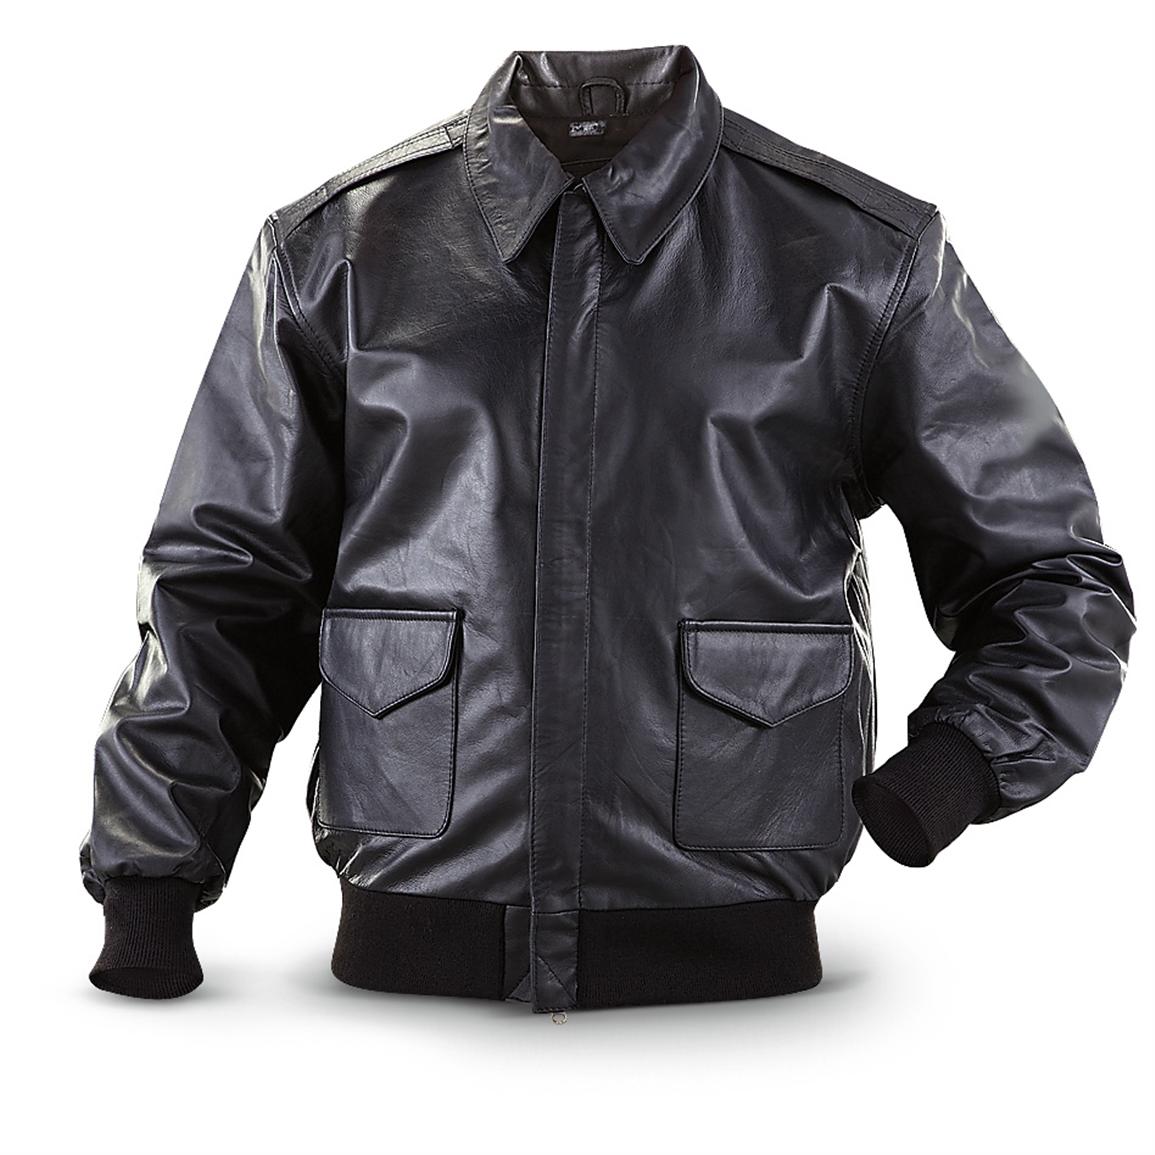 Mil - Tec® A2 - style Military Surplus Leather Jacket, Black - 206180 ...